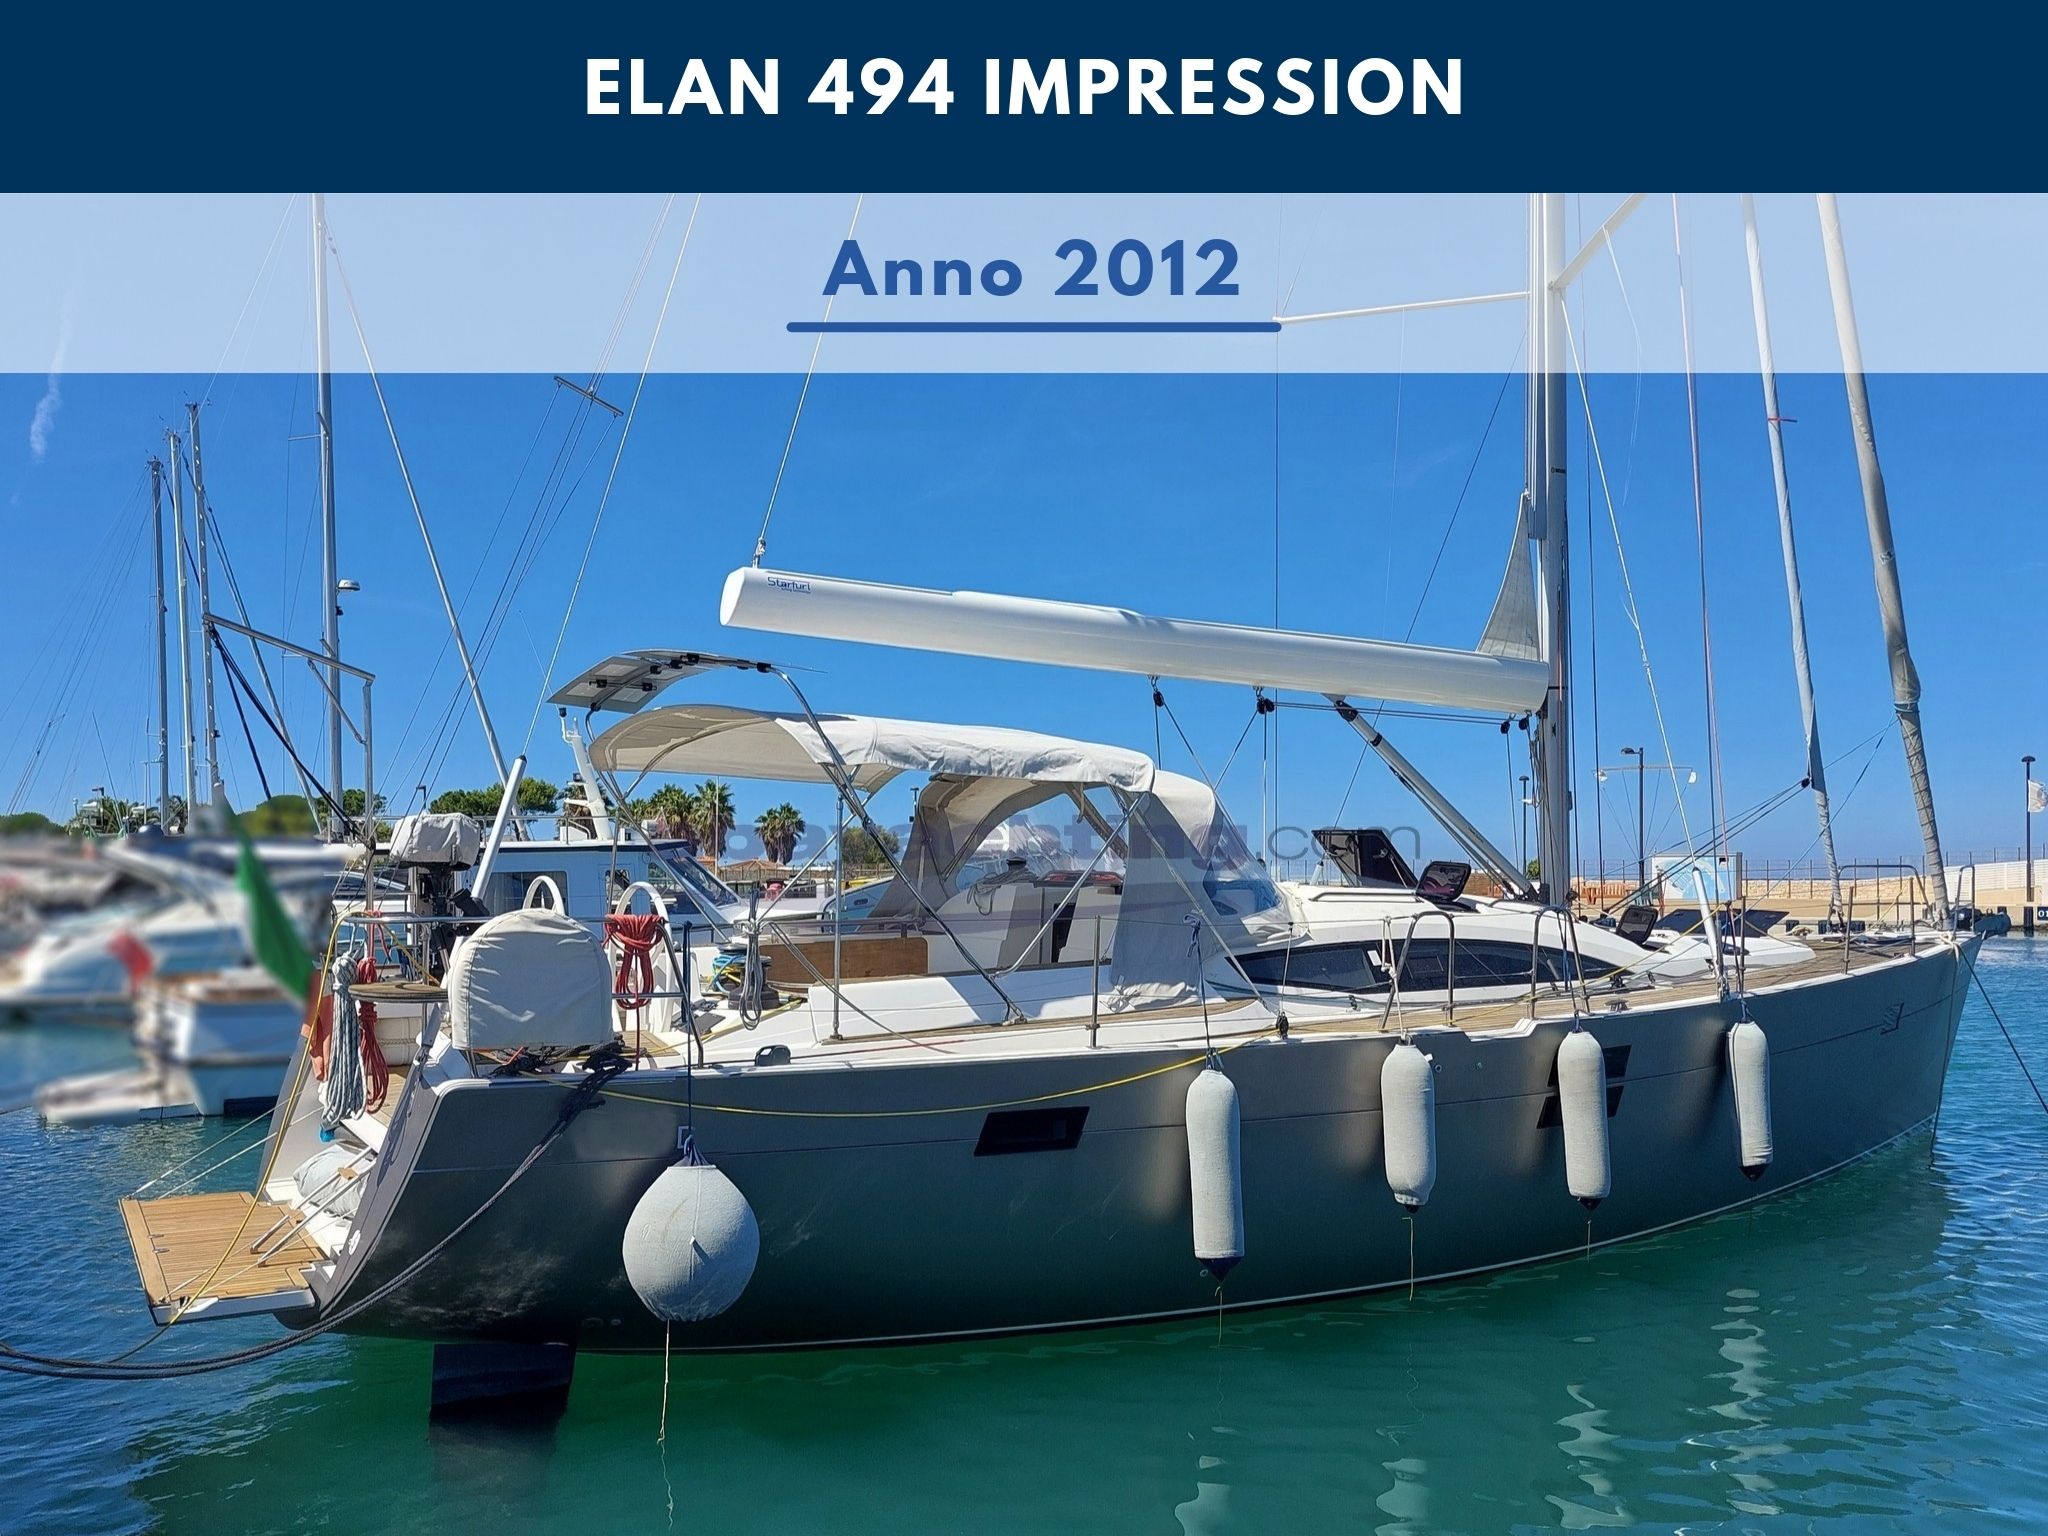 Nuovo Arrivo: Elan 494 Impression